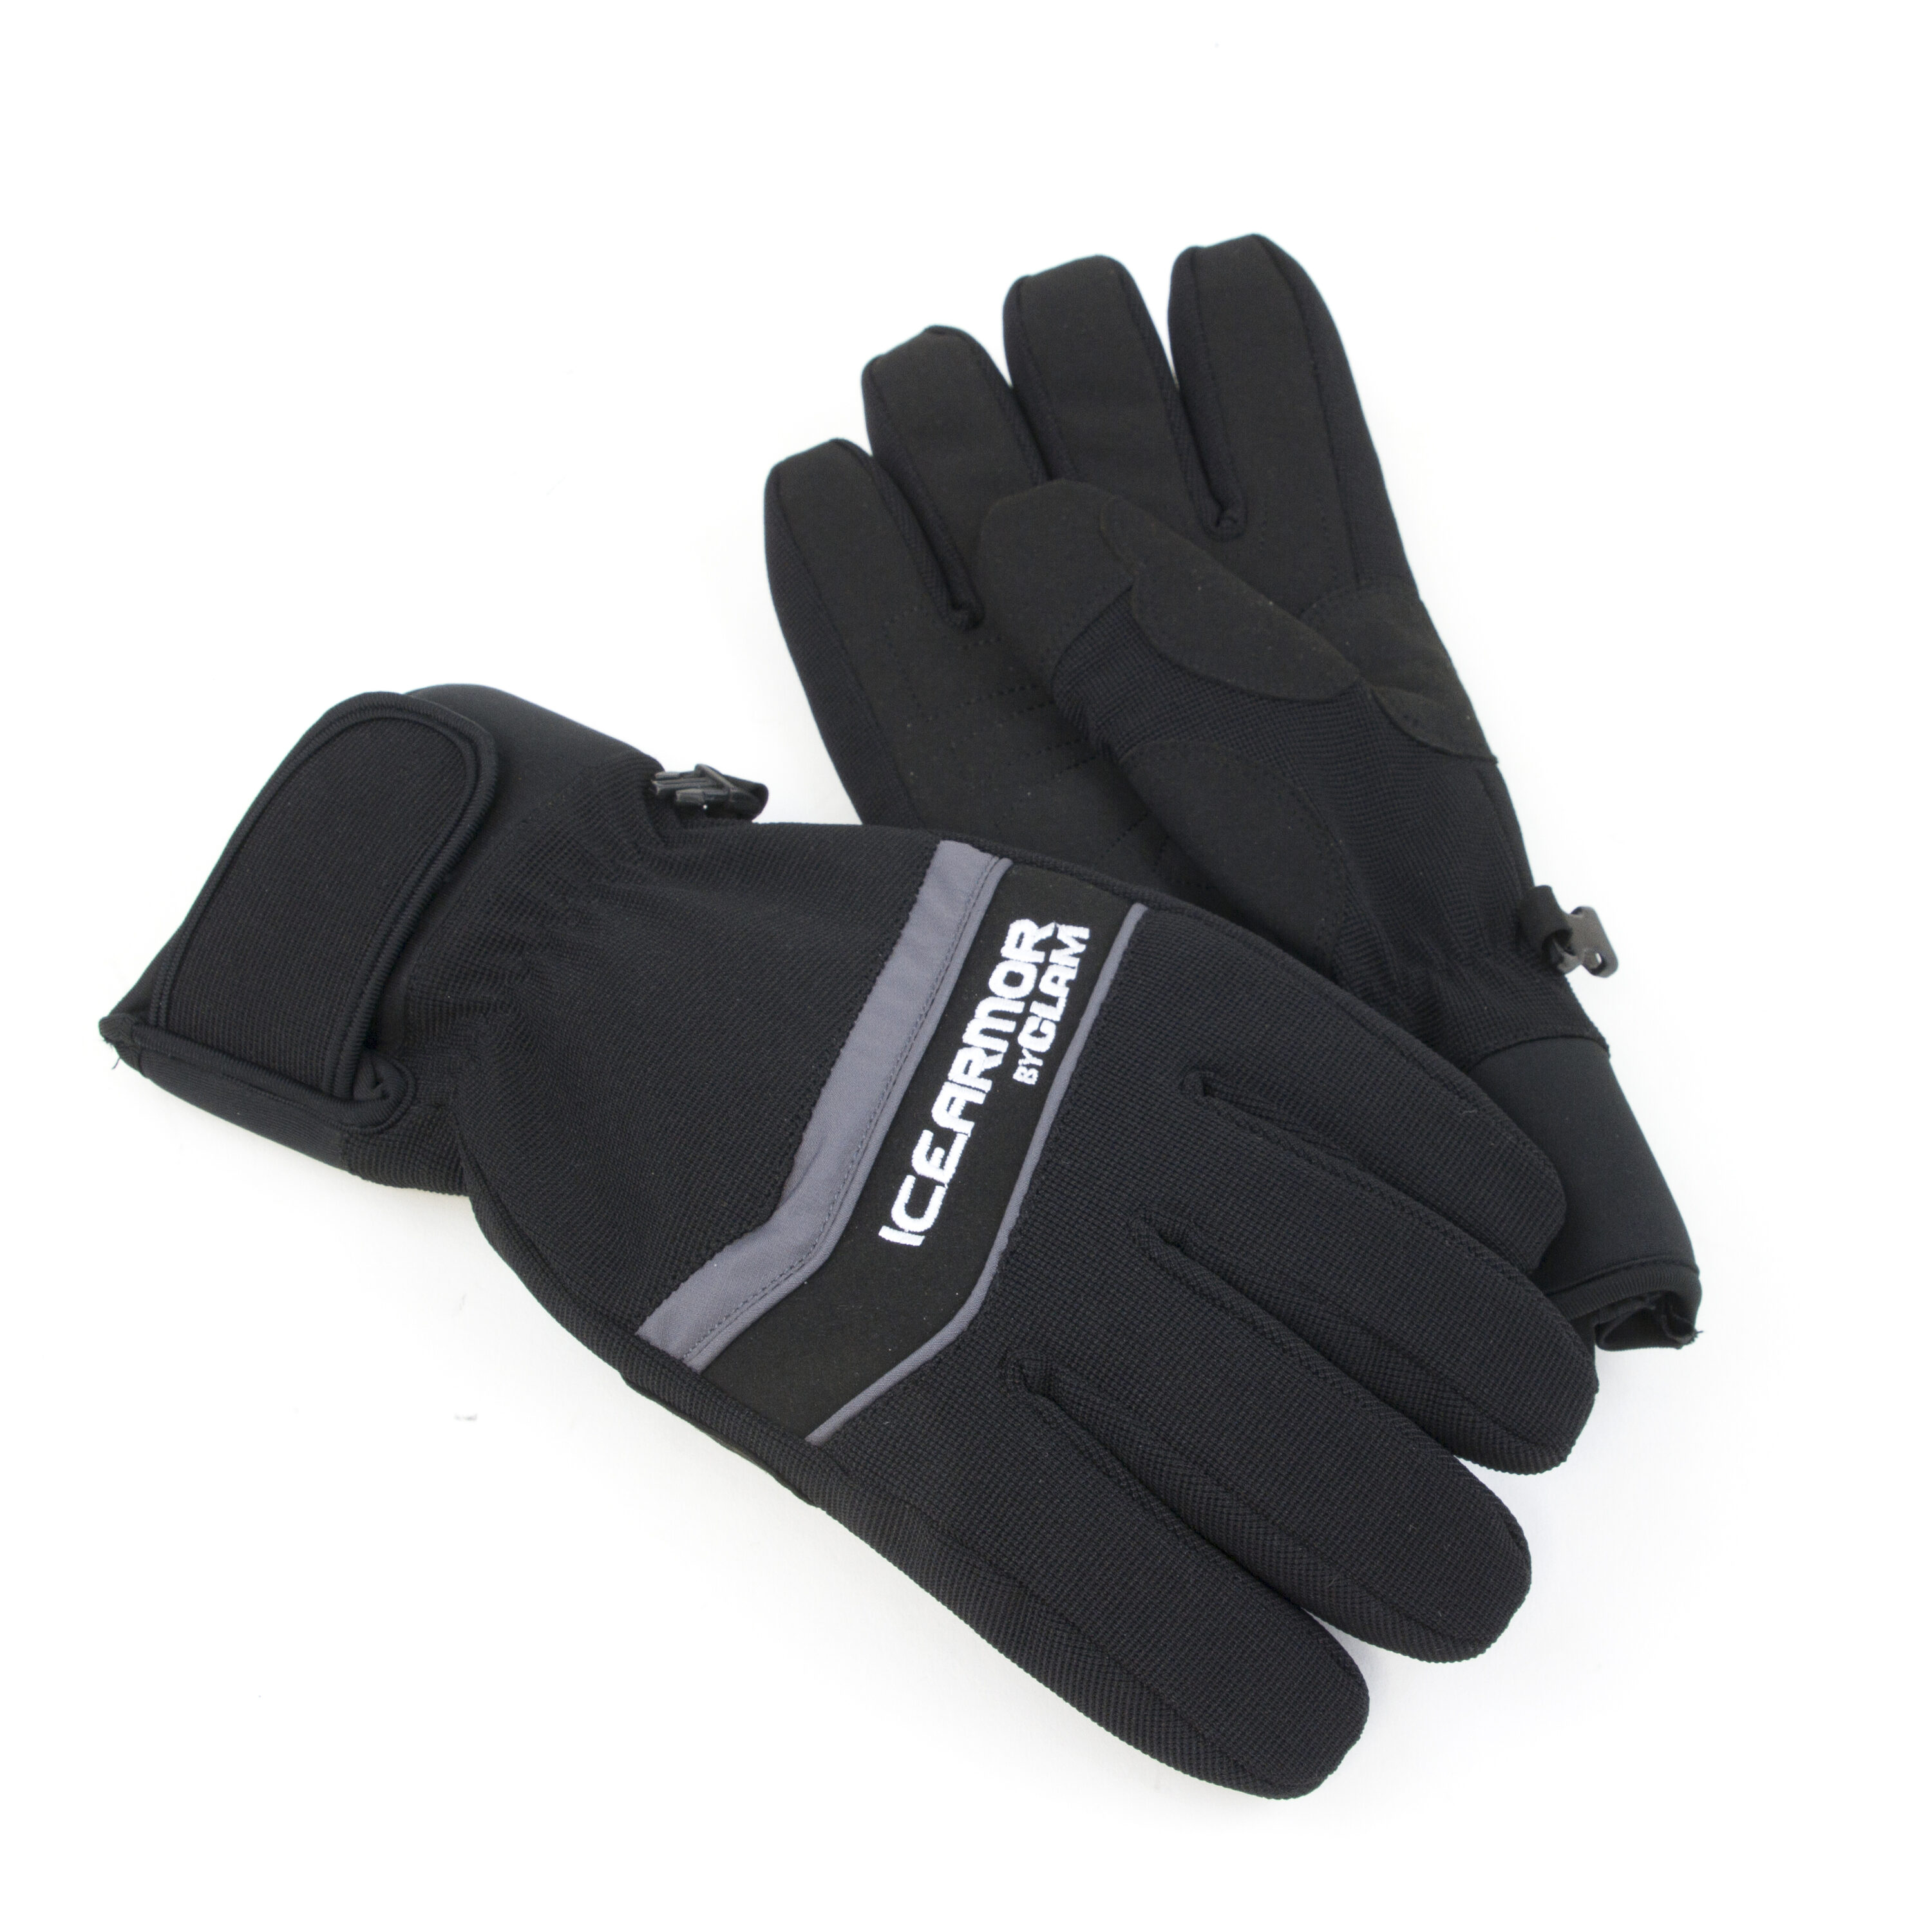 Clam Outdoors Edge Men's Ice Fishing Gloves - Black, L/XL